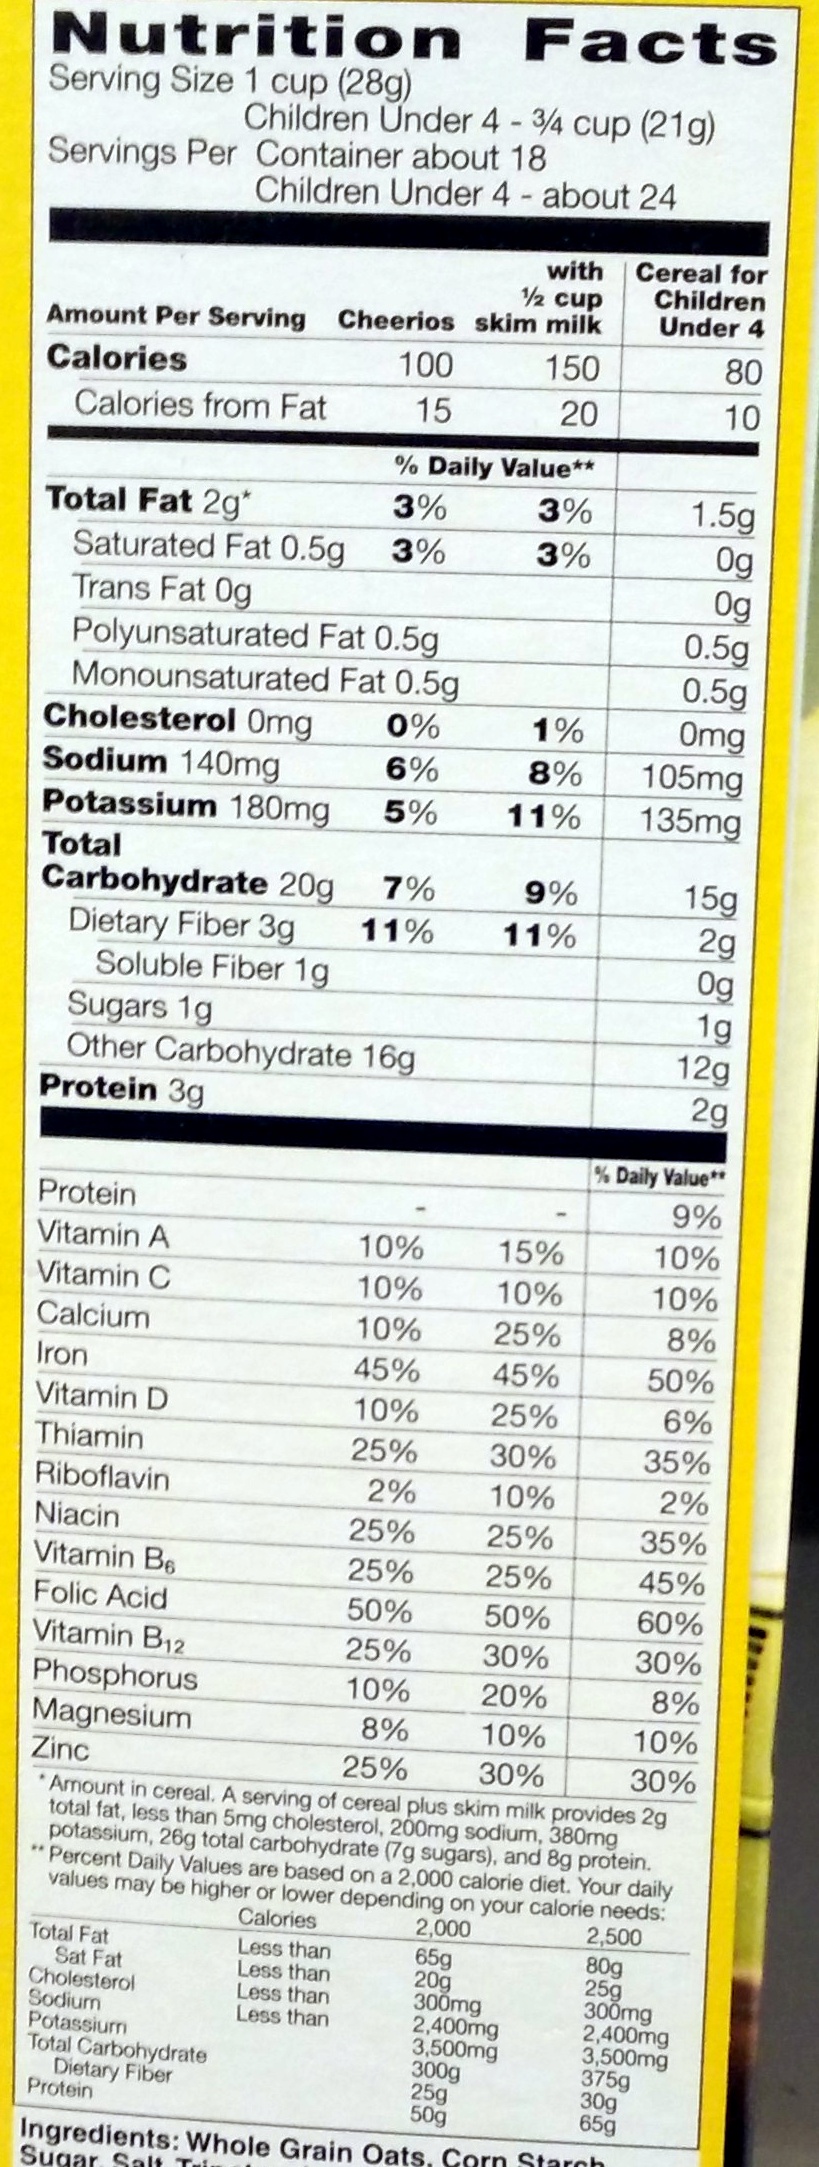 Cheerios - Nutrition facts